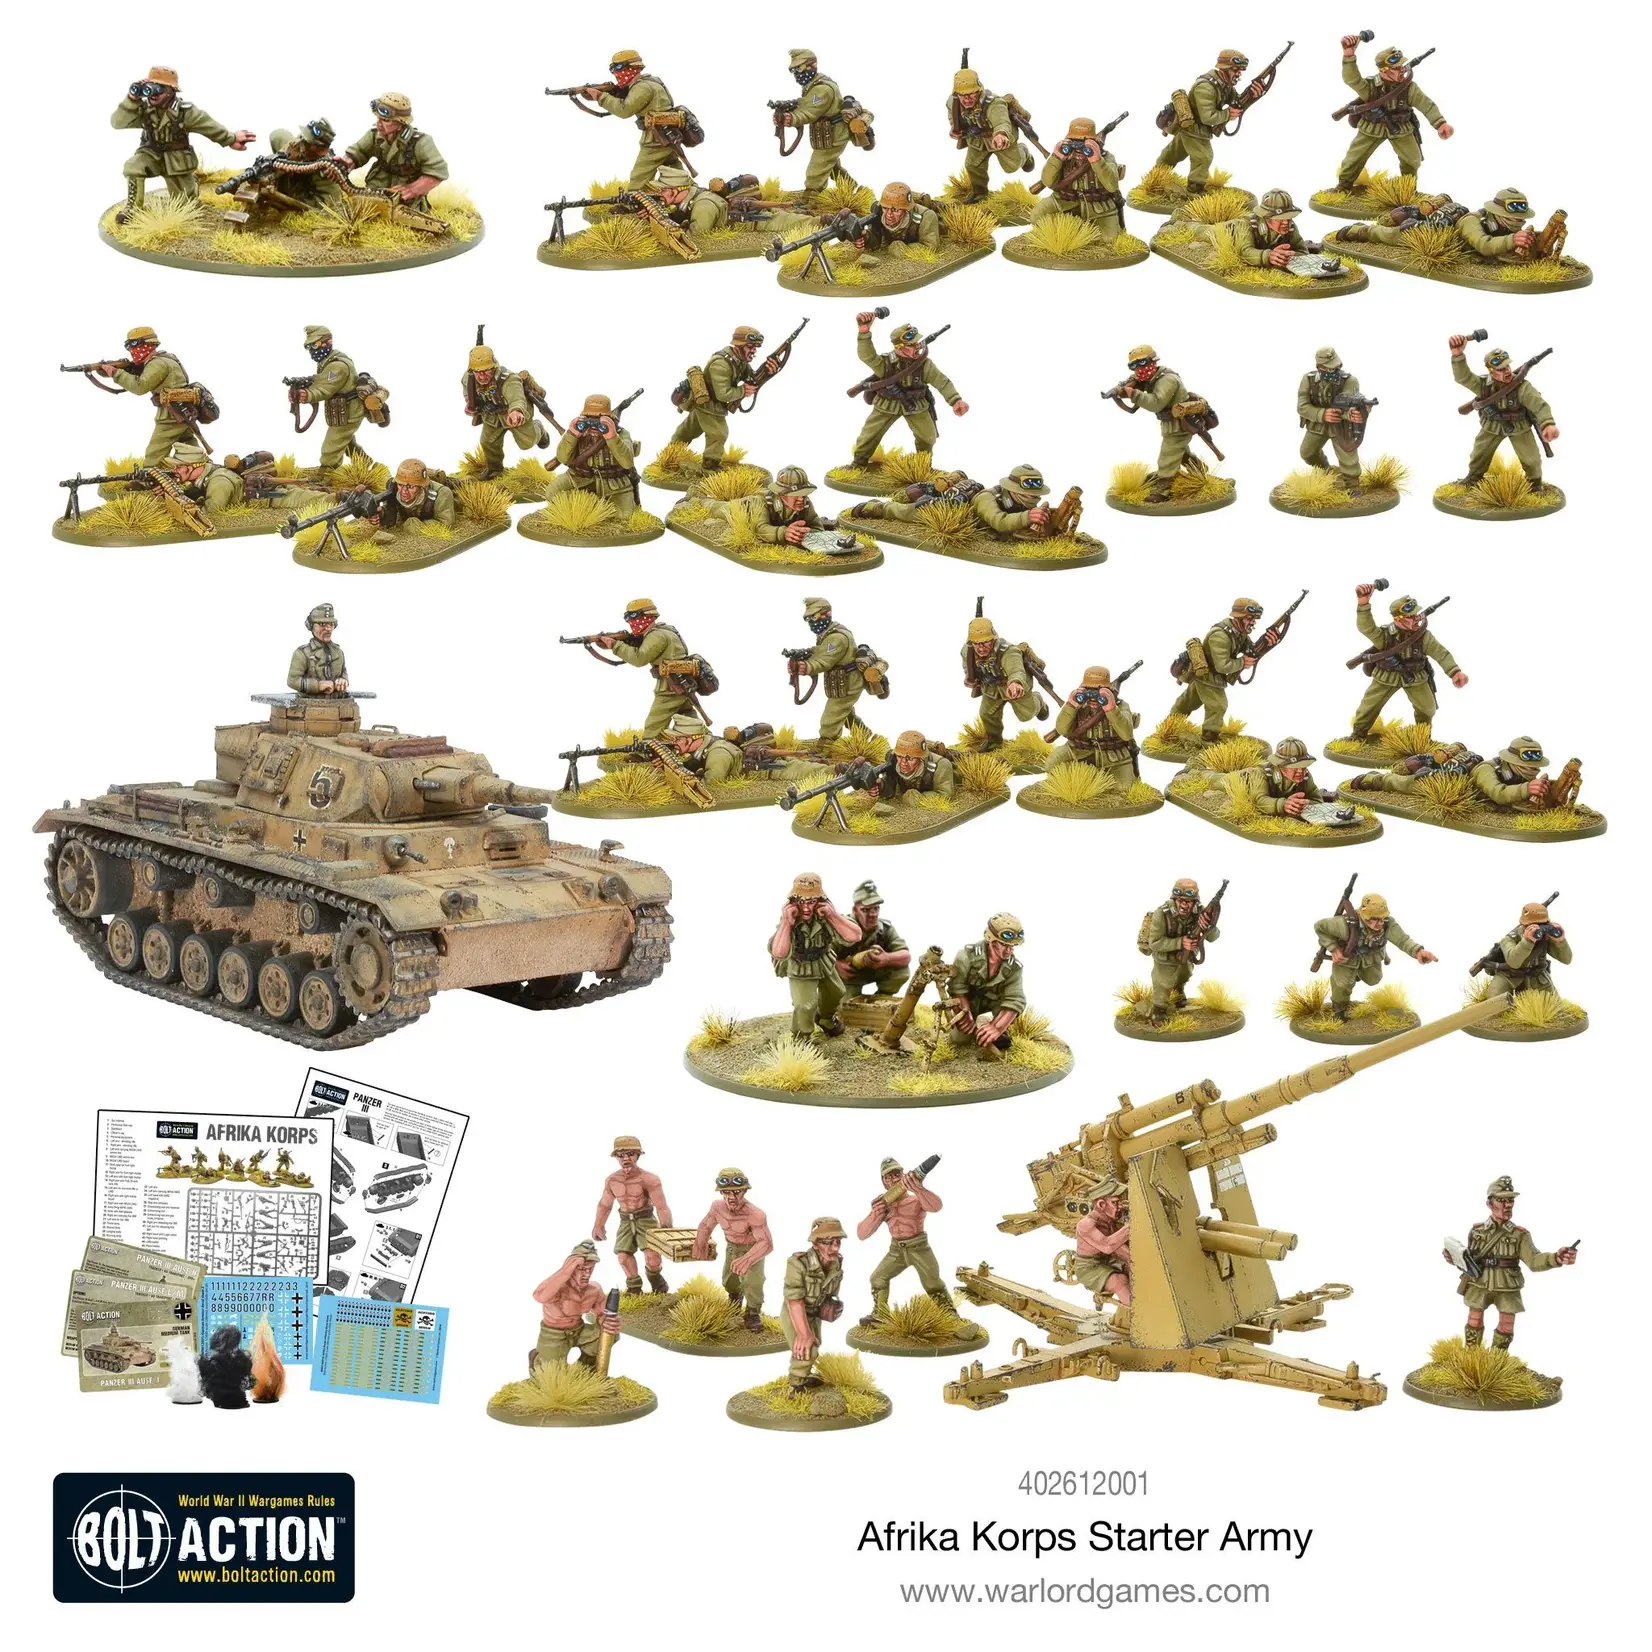 Afrika Korps: starter army - Bolt action